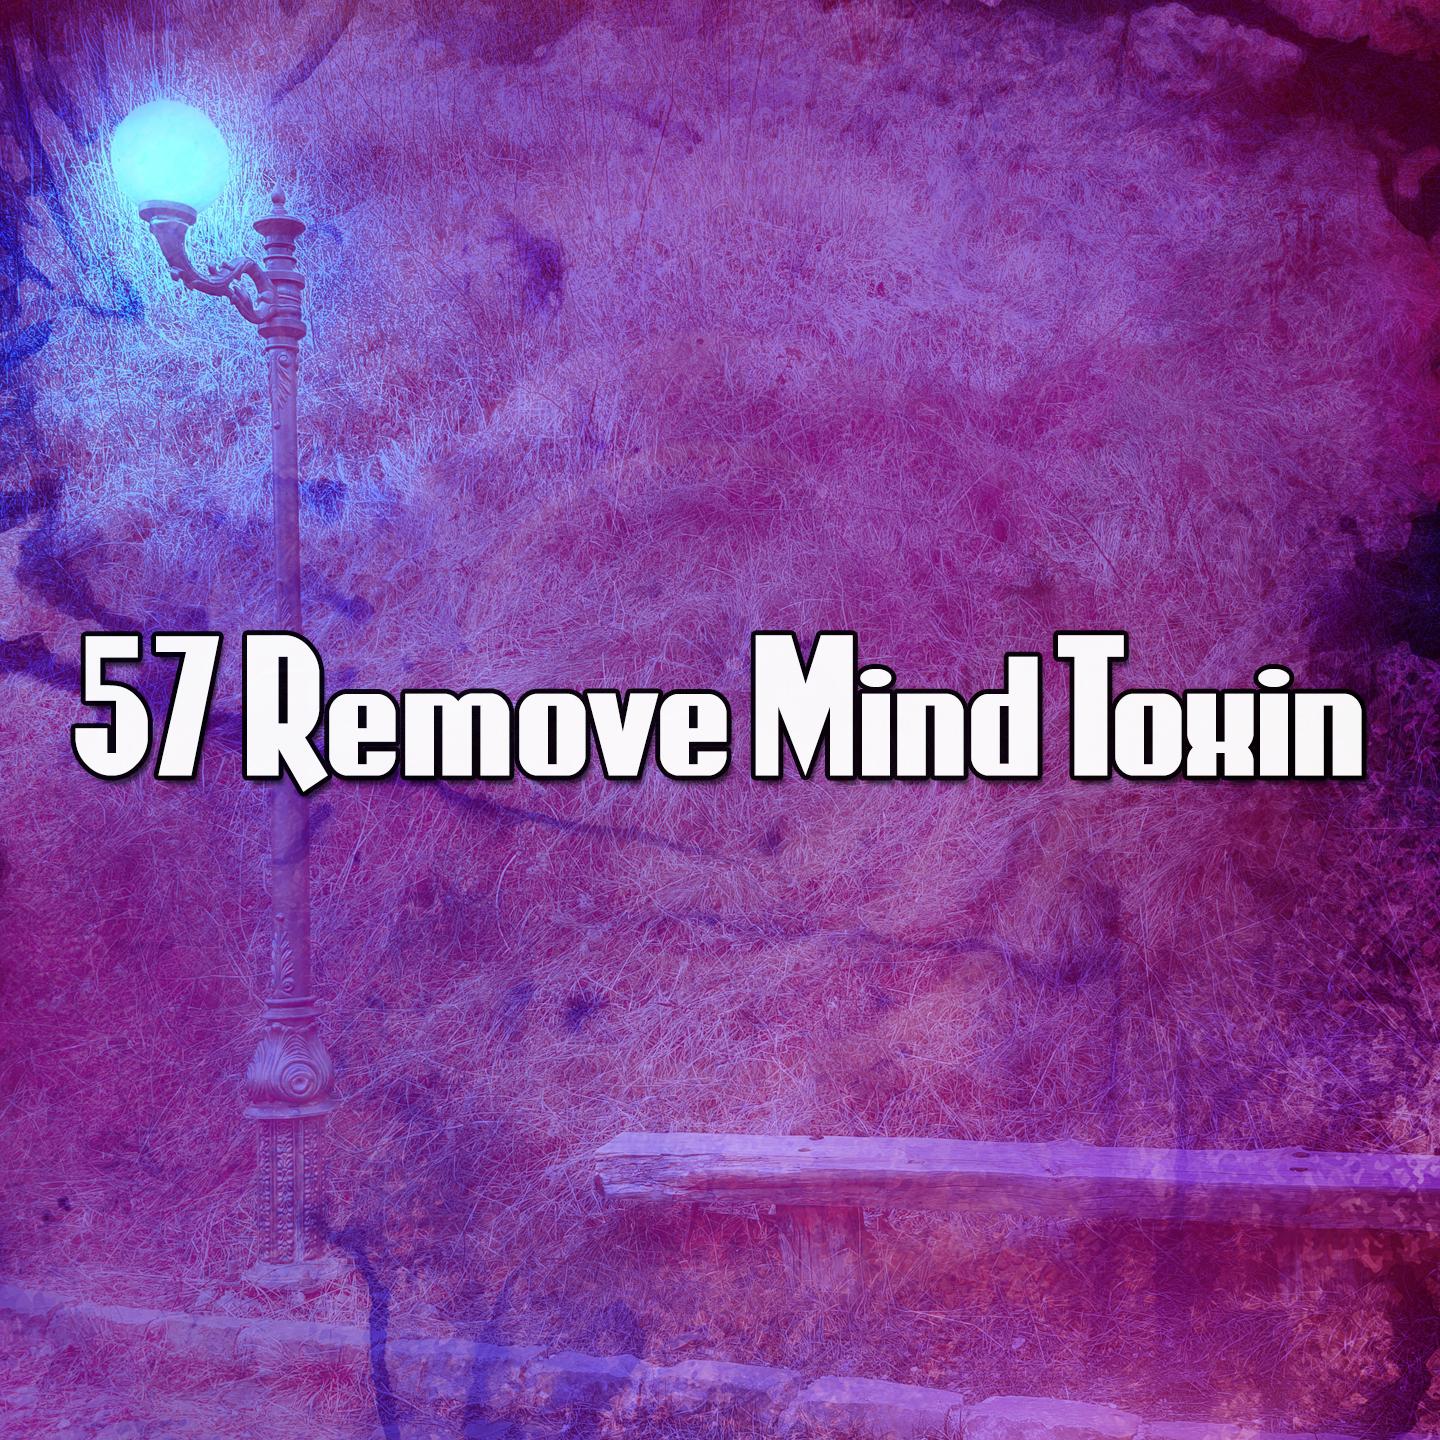 57 Remove Mind Toxin